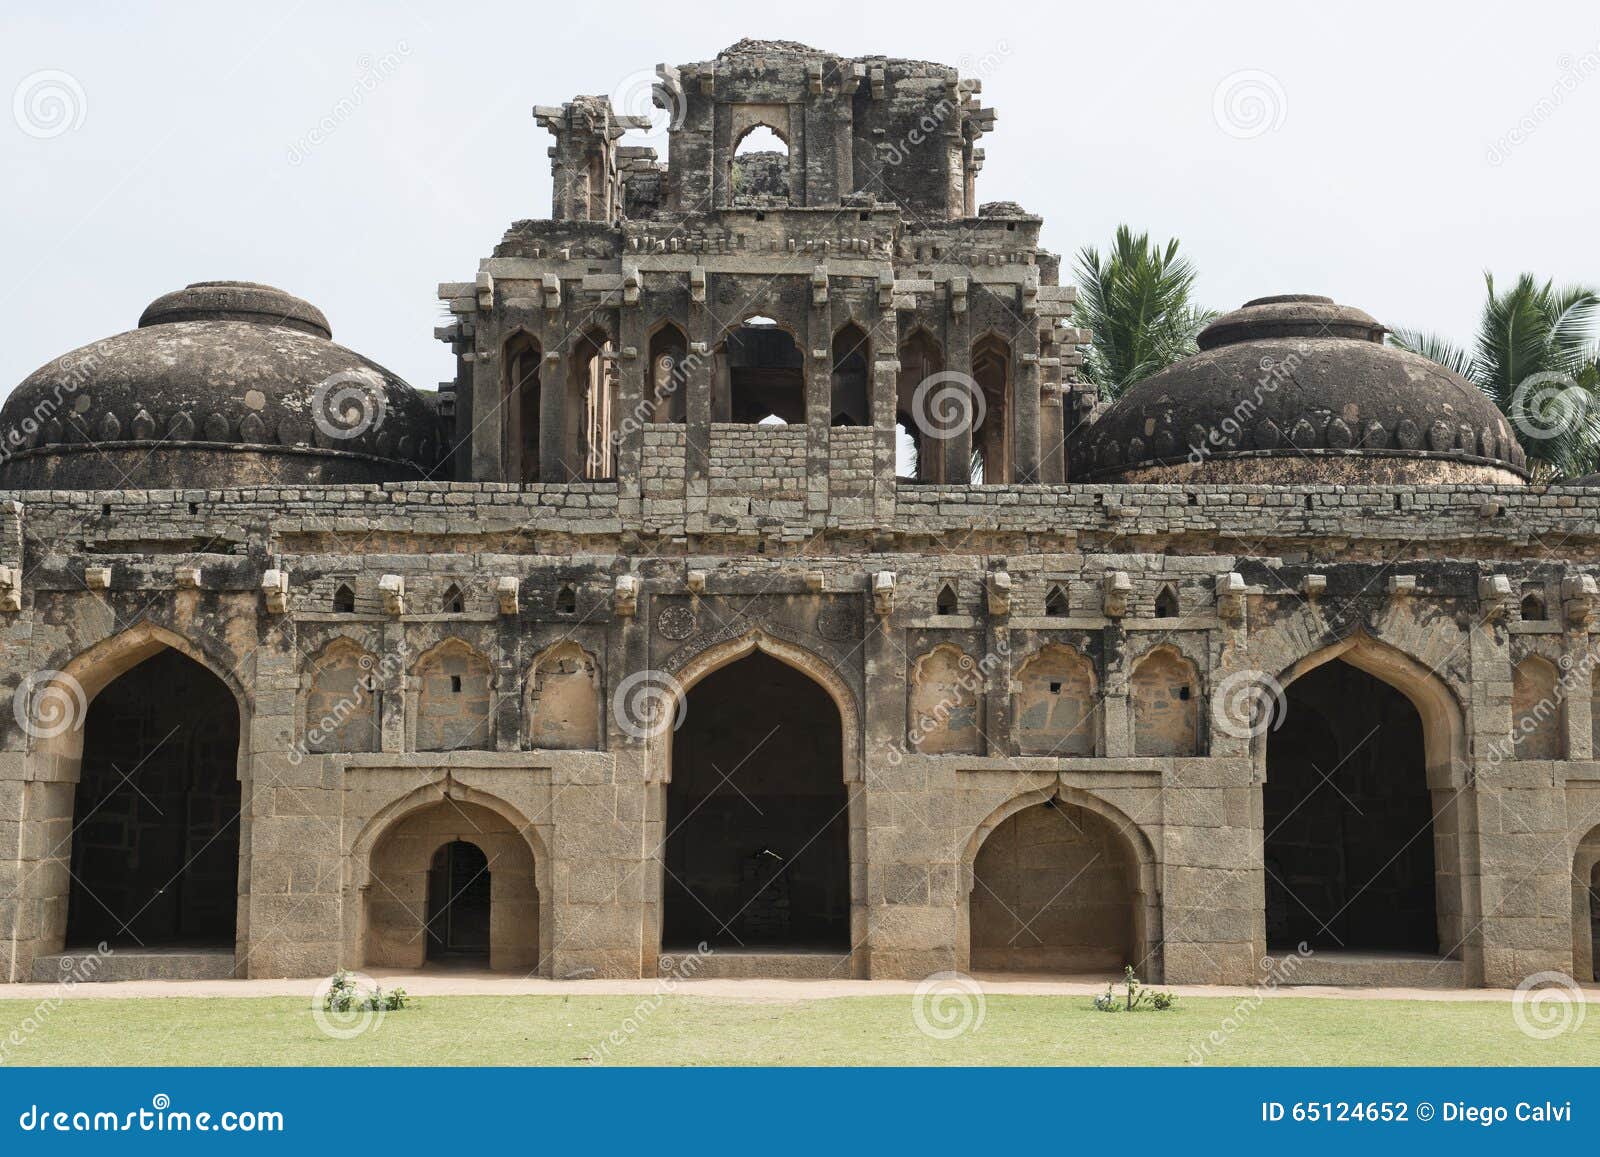 hindu temple facade, hampi, india